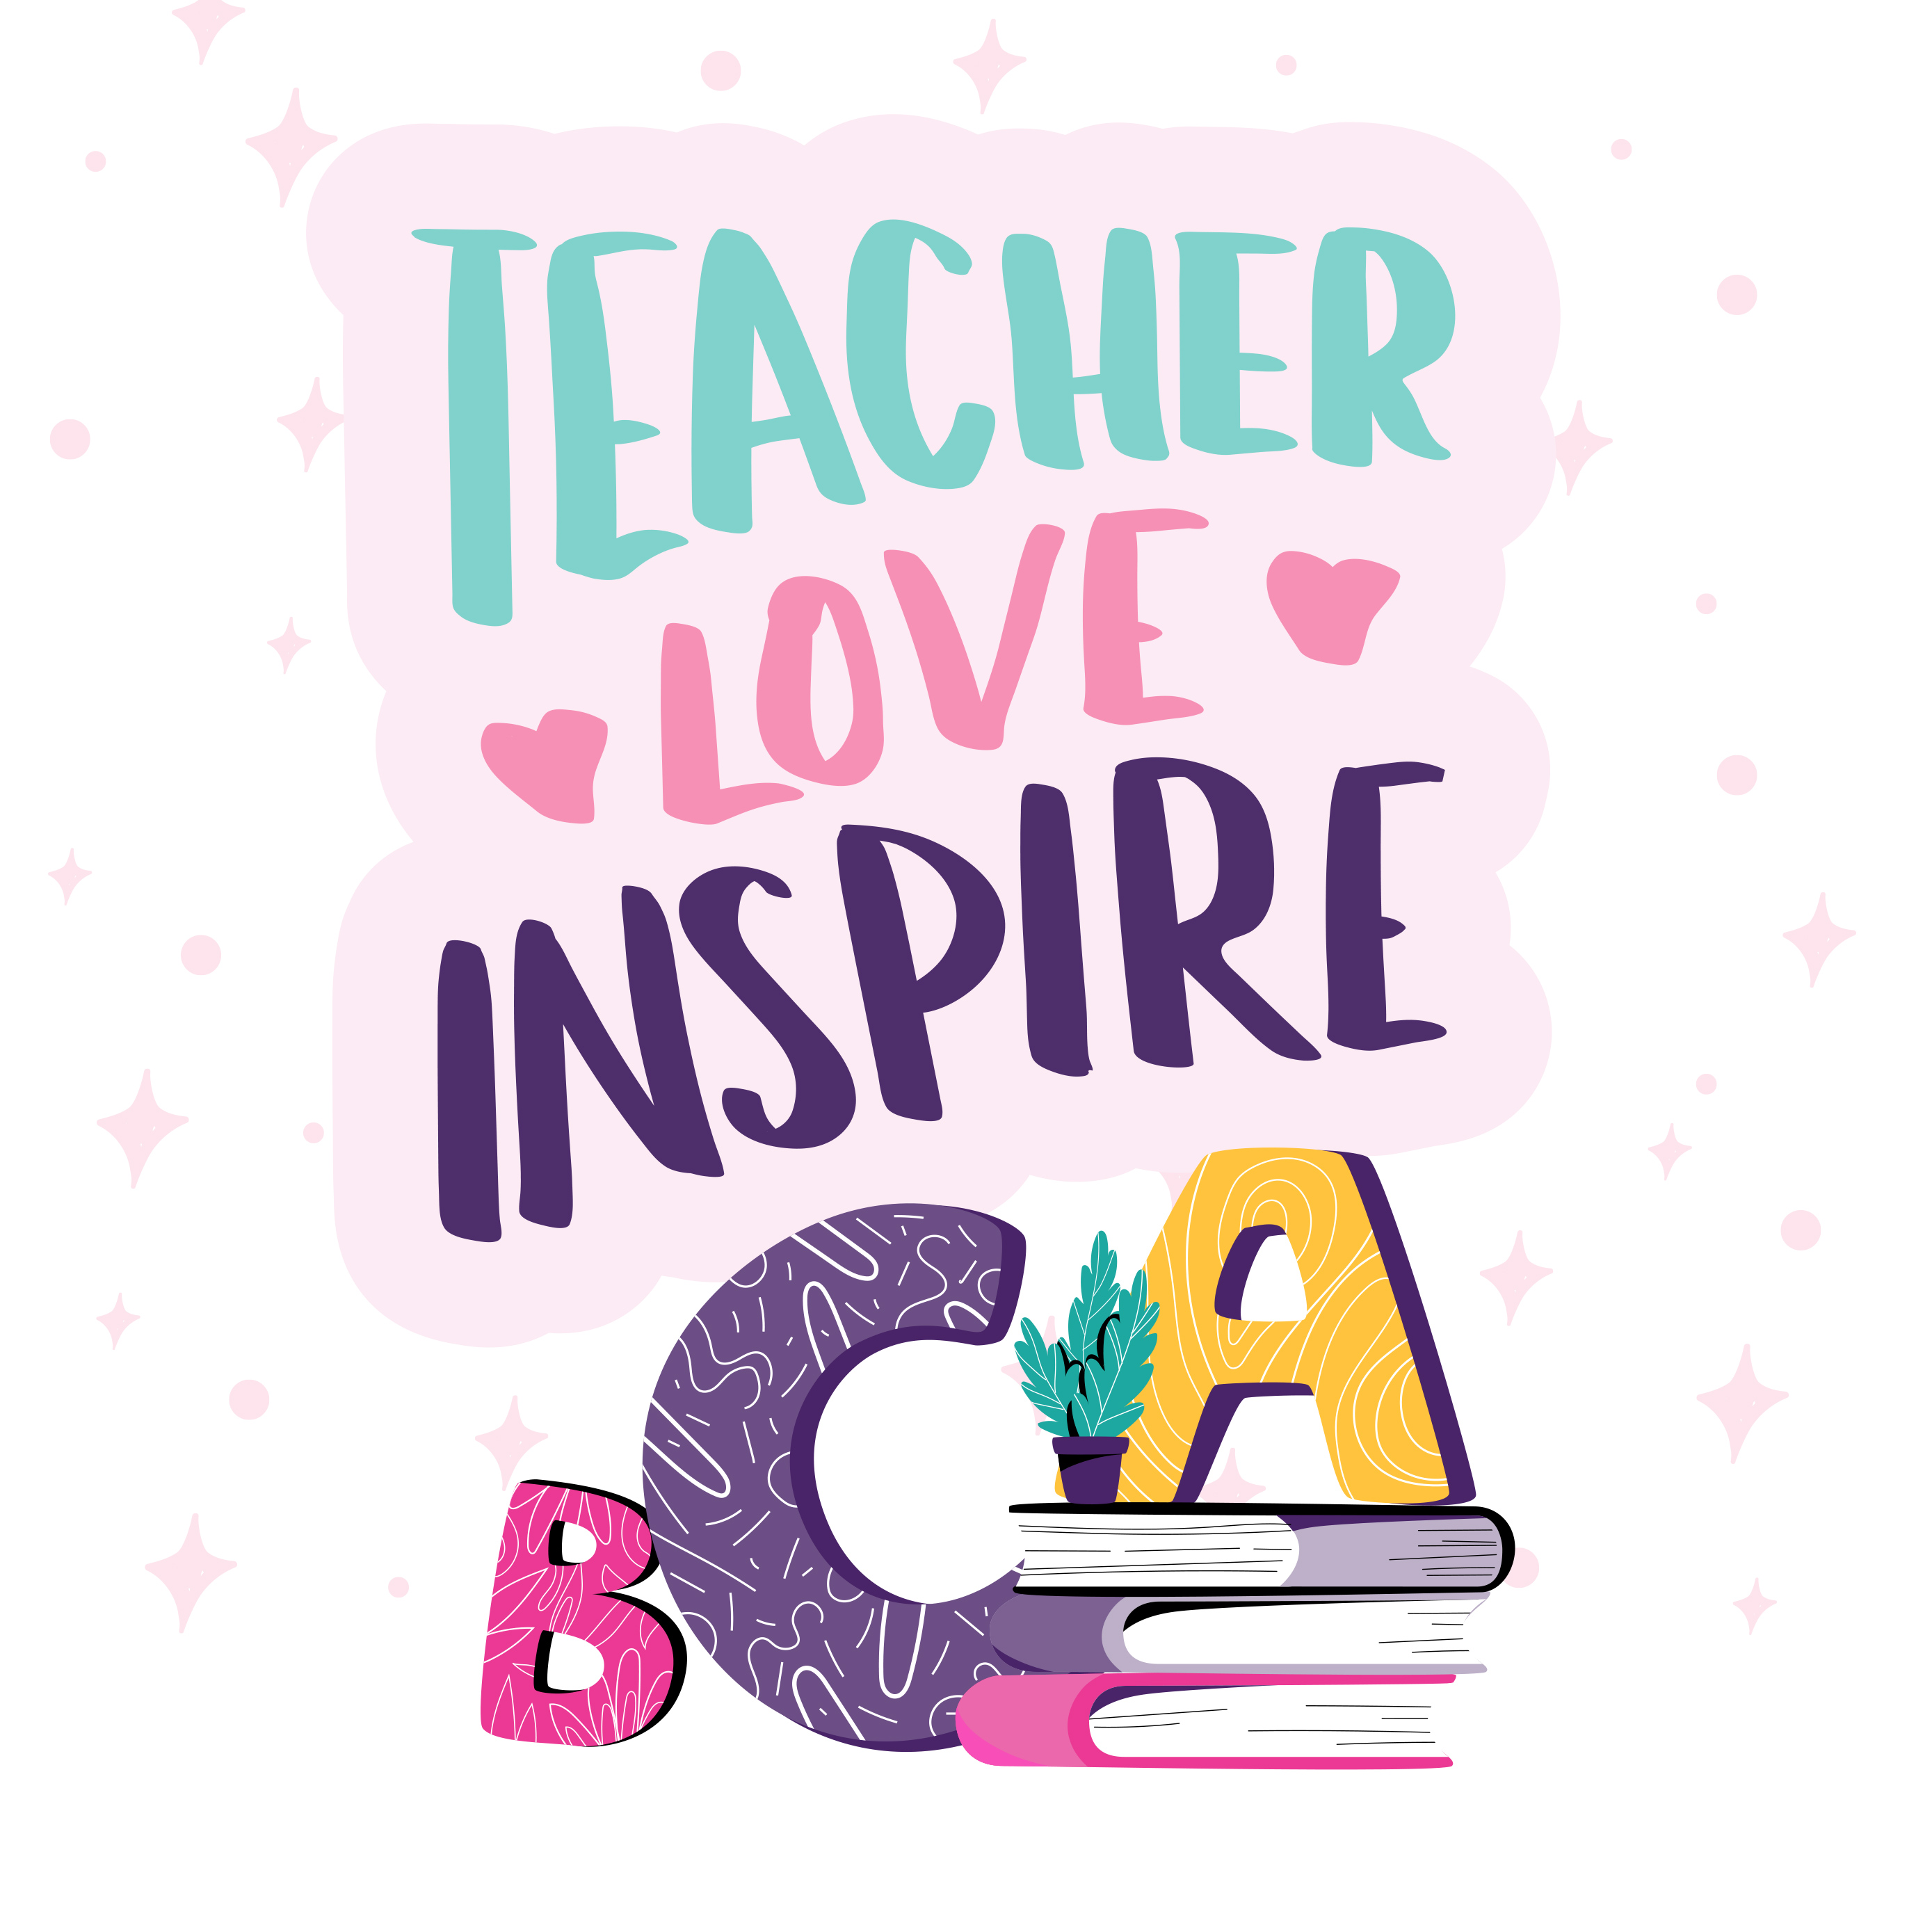 Teacher inspire vector image